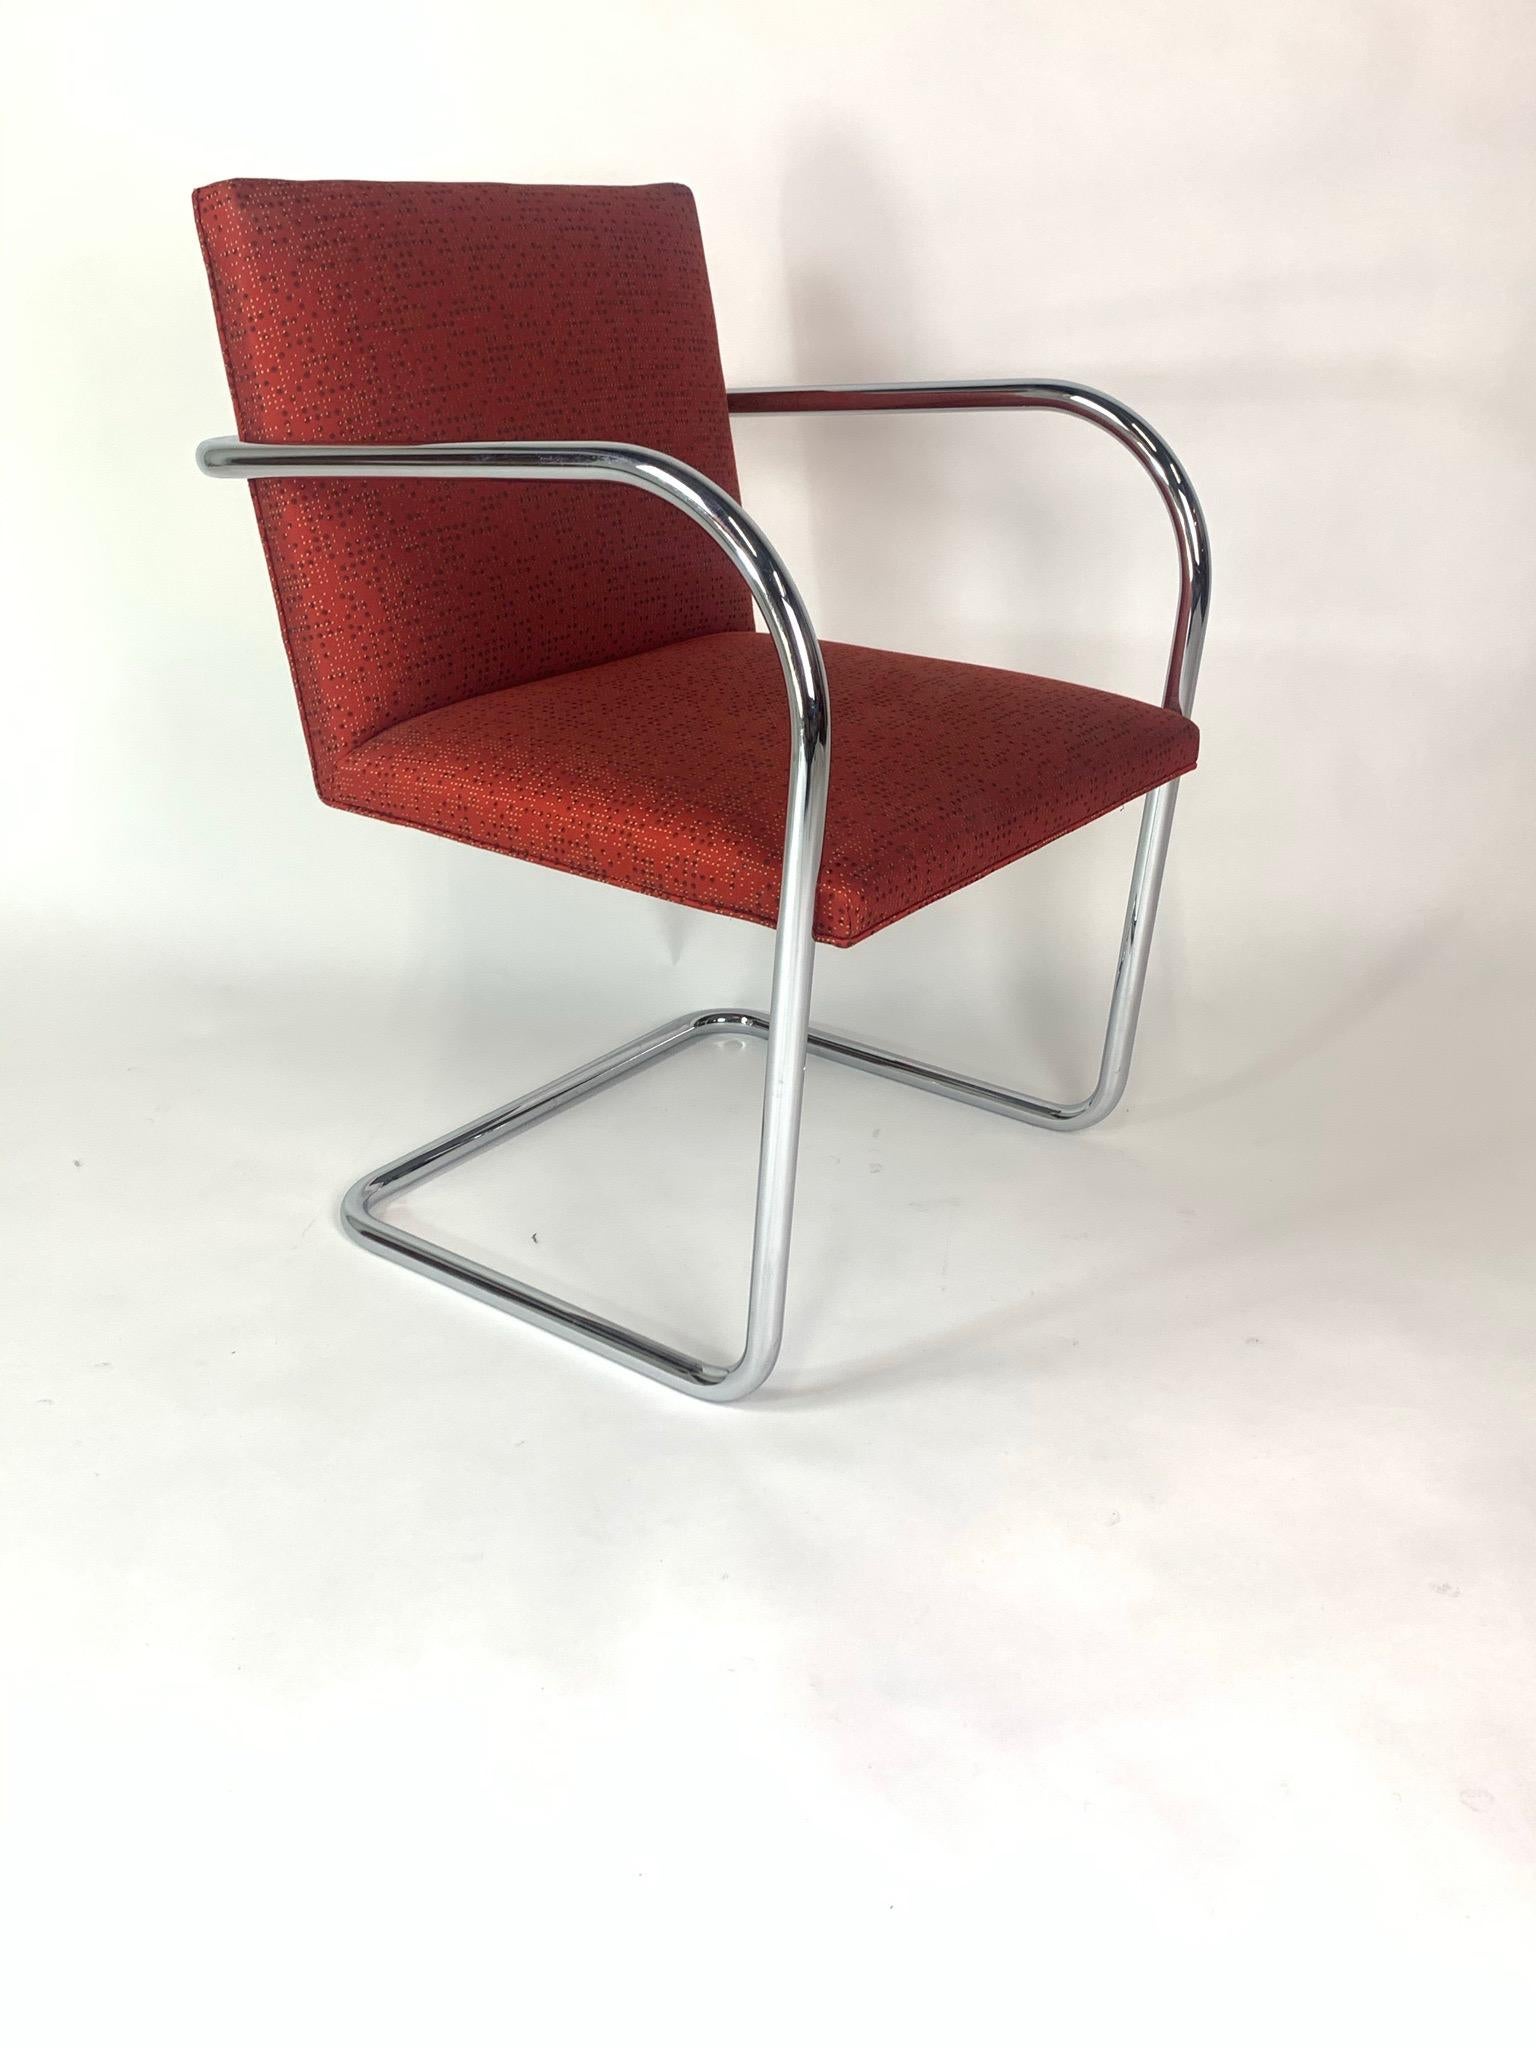 Ludwig Mies van der Rohe for Knoll Tubular Brno Chairs 12 Available 1